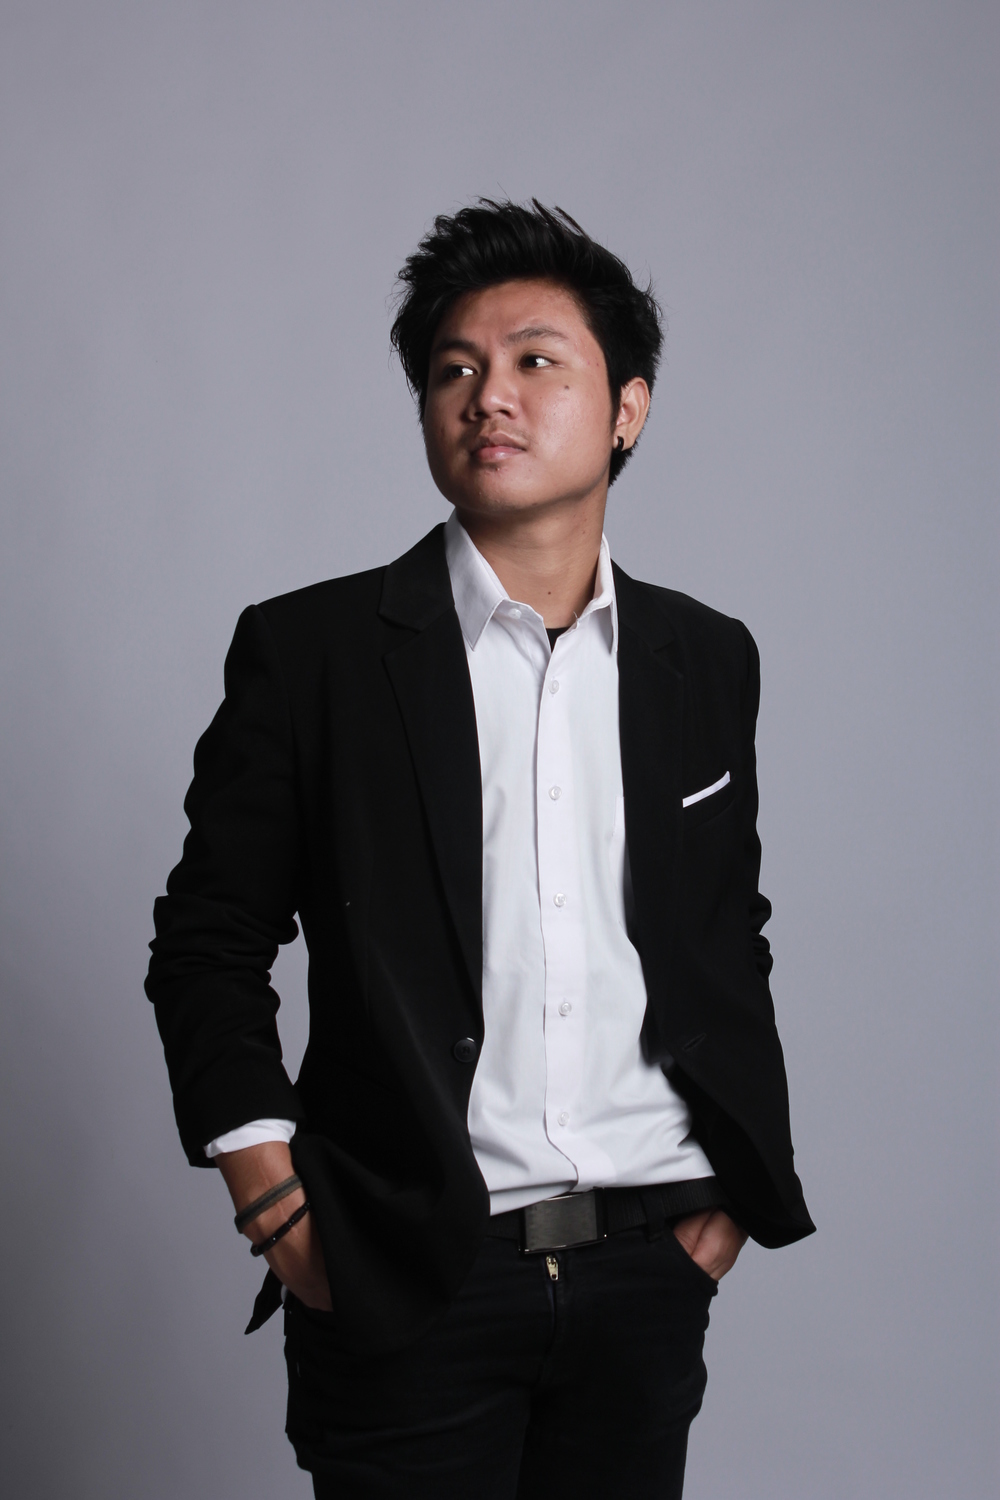 Biografi Profil Biodata Tyok Satrio - Peserta X Factor Indonesia 2021 instagram ig Wikipedia Indonesia